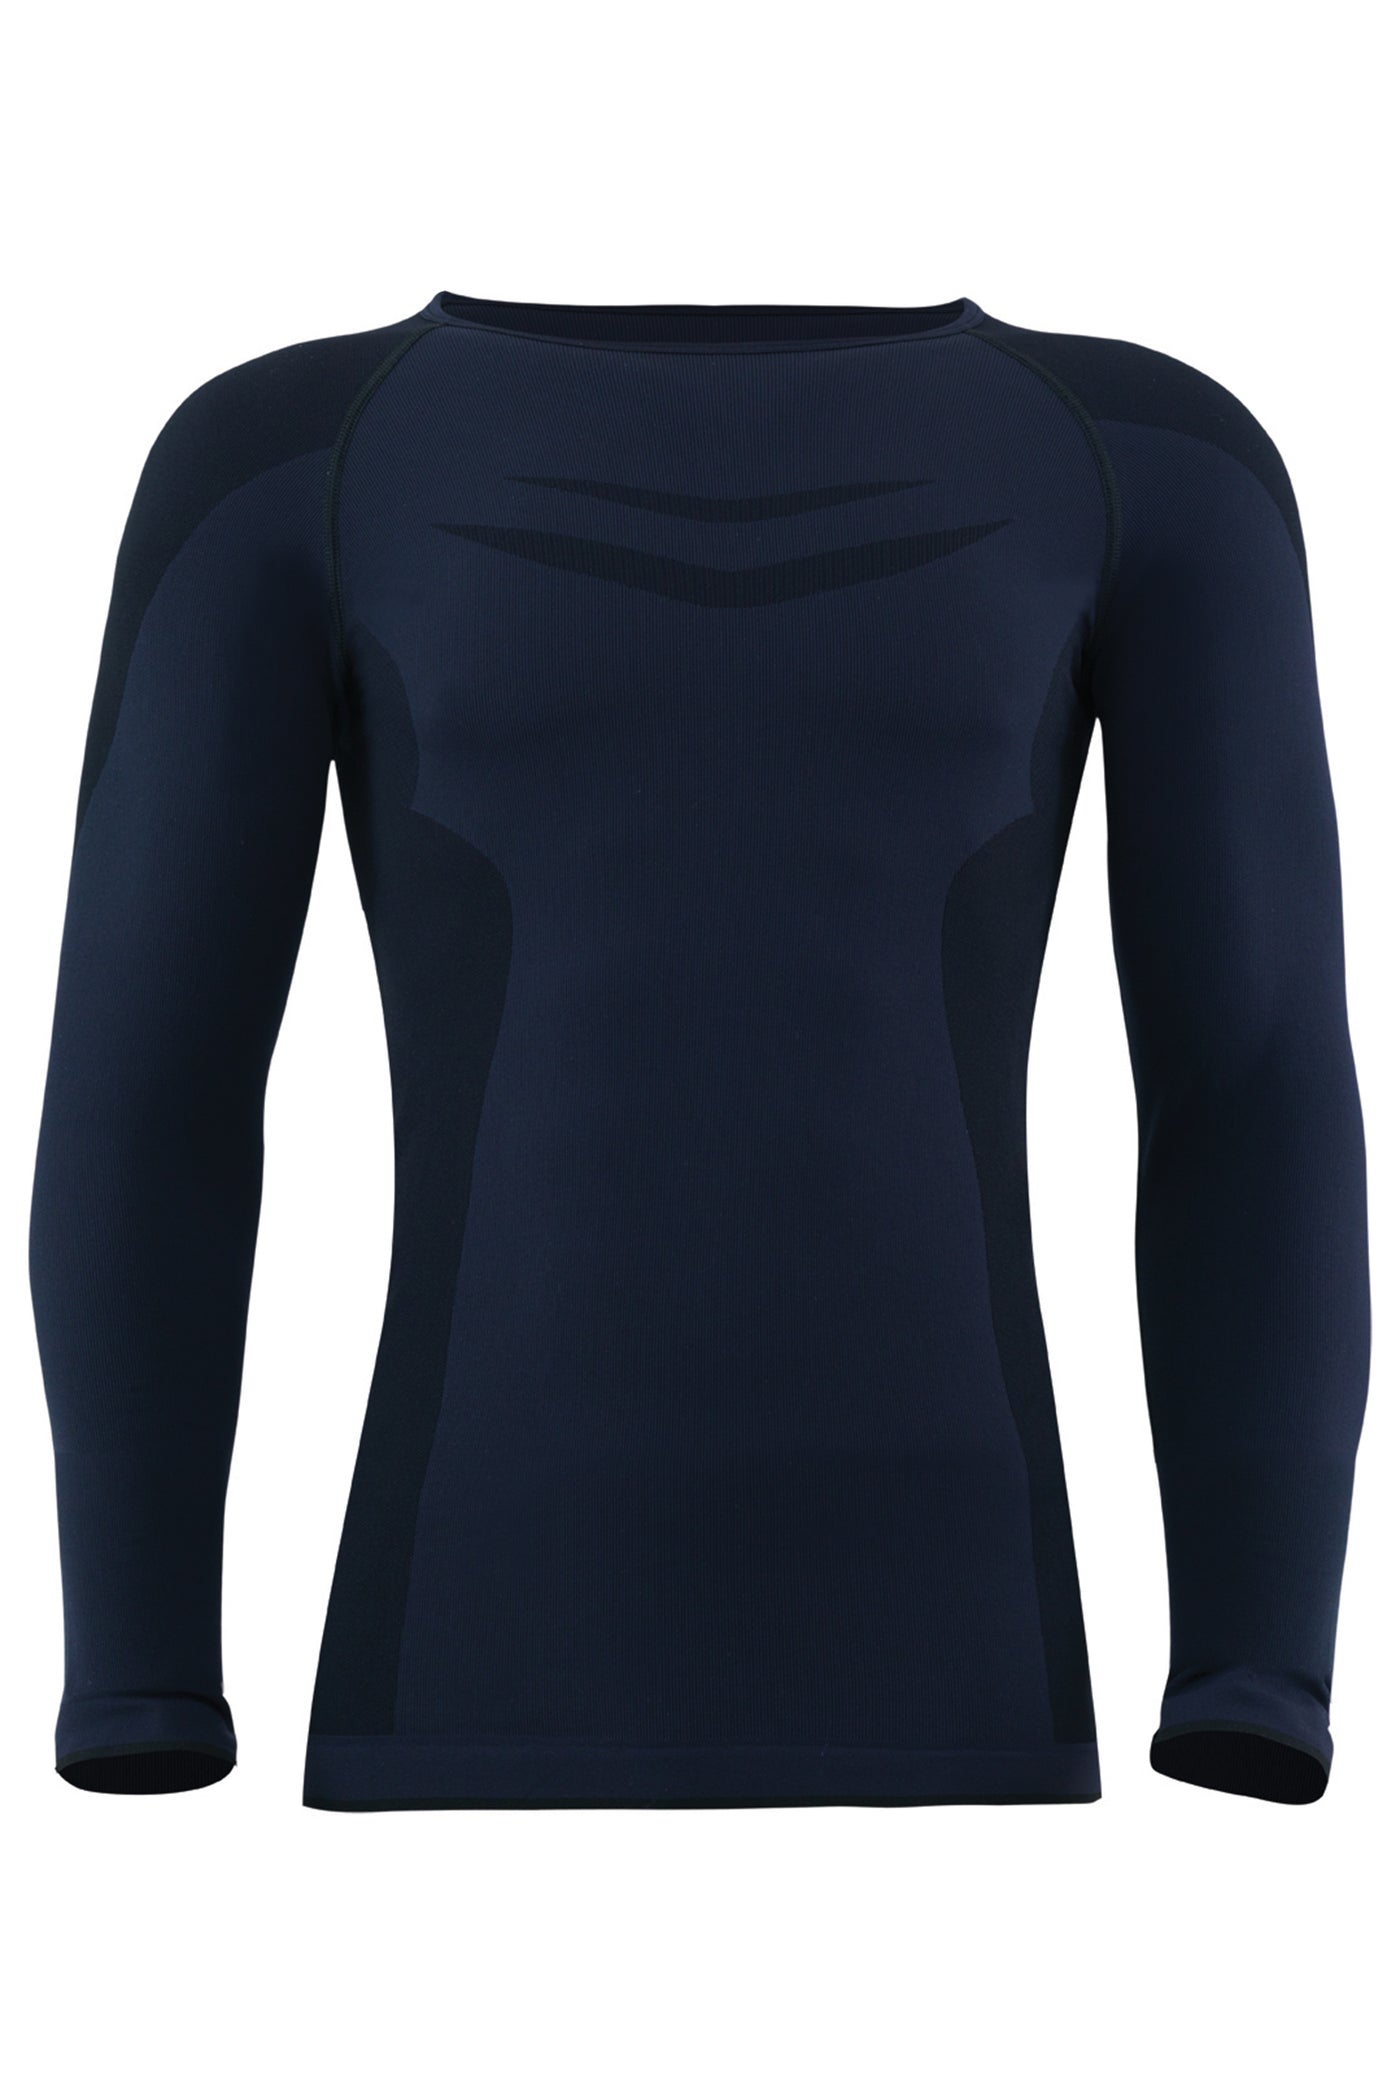 blackspade-Men's thermal seamless long sleeve t-shirt-9571, level-2-underwear-black